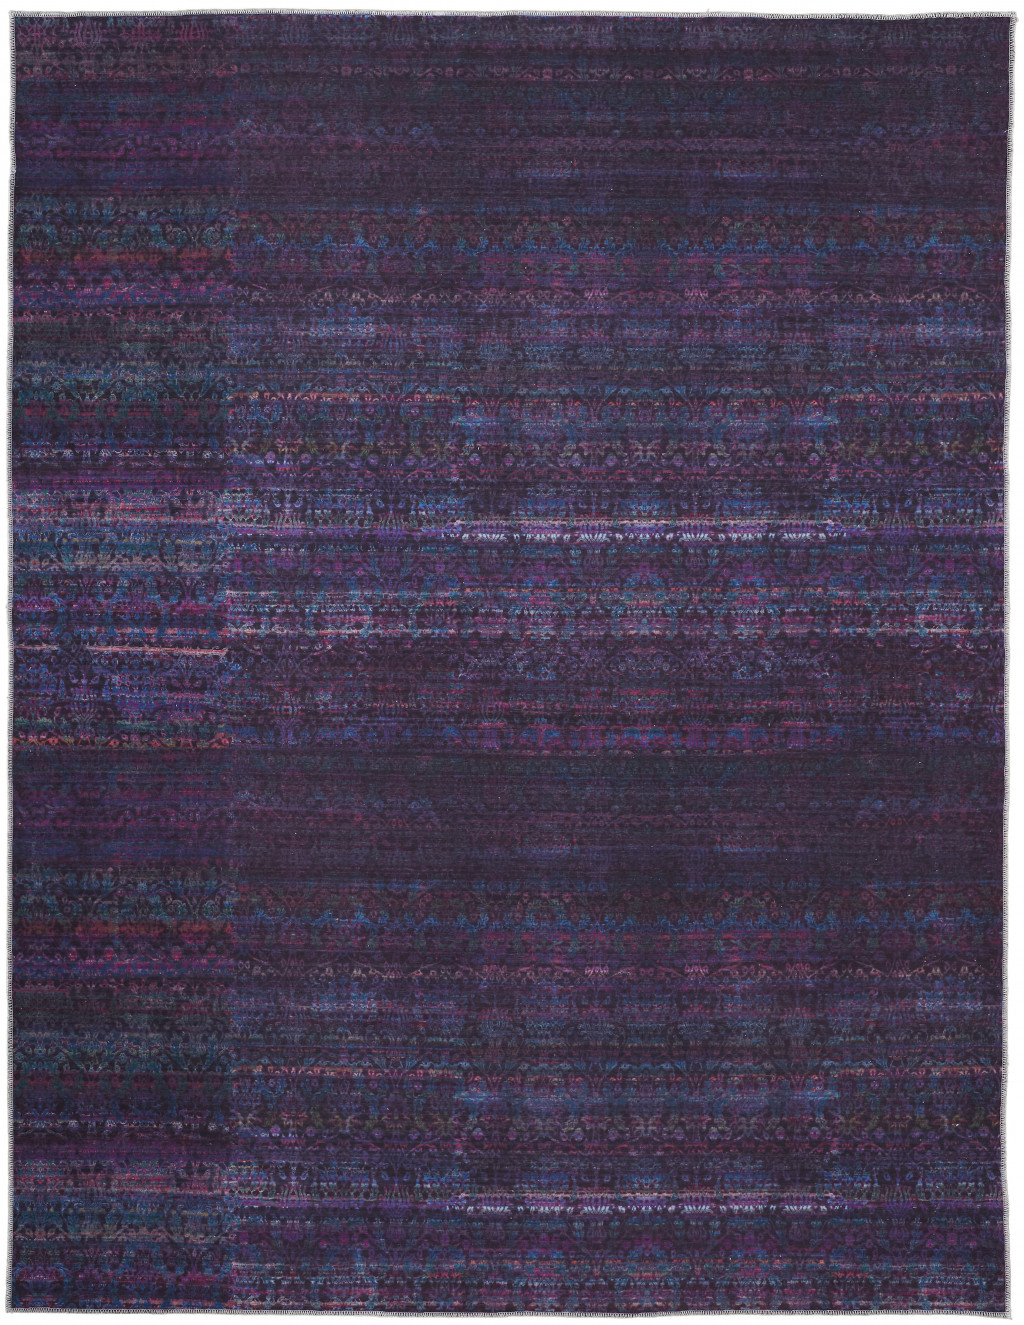 10' X 14' Blue And Purple Striped Power Loom Area Rug-515235-1